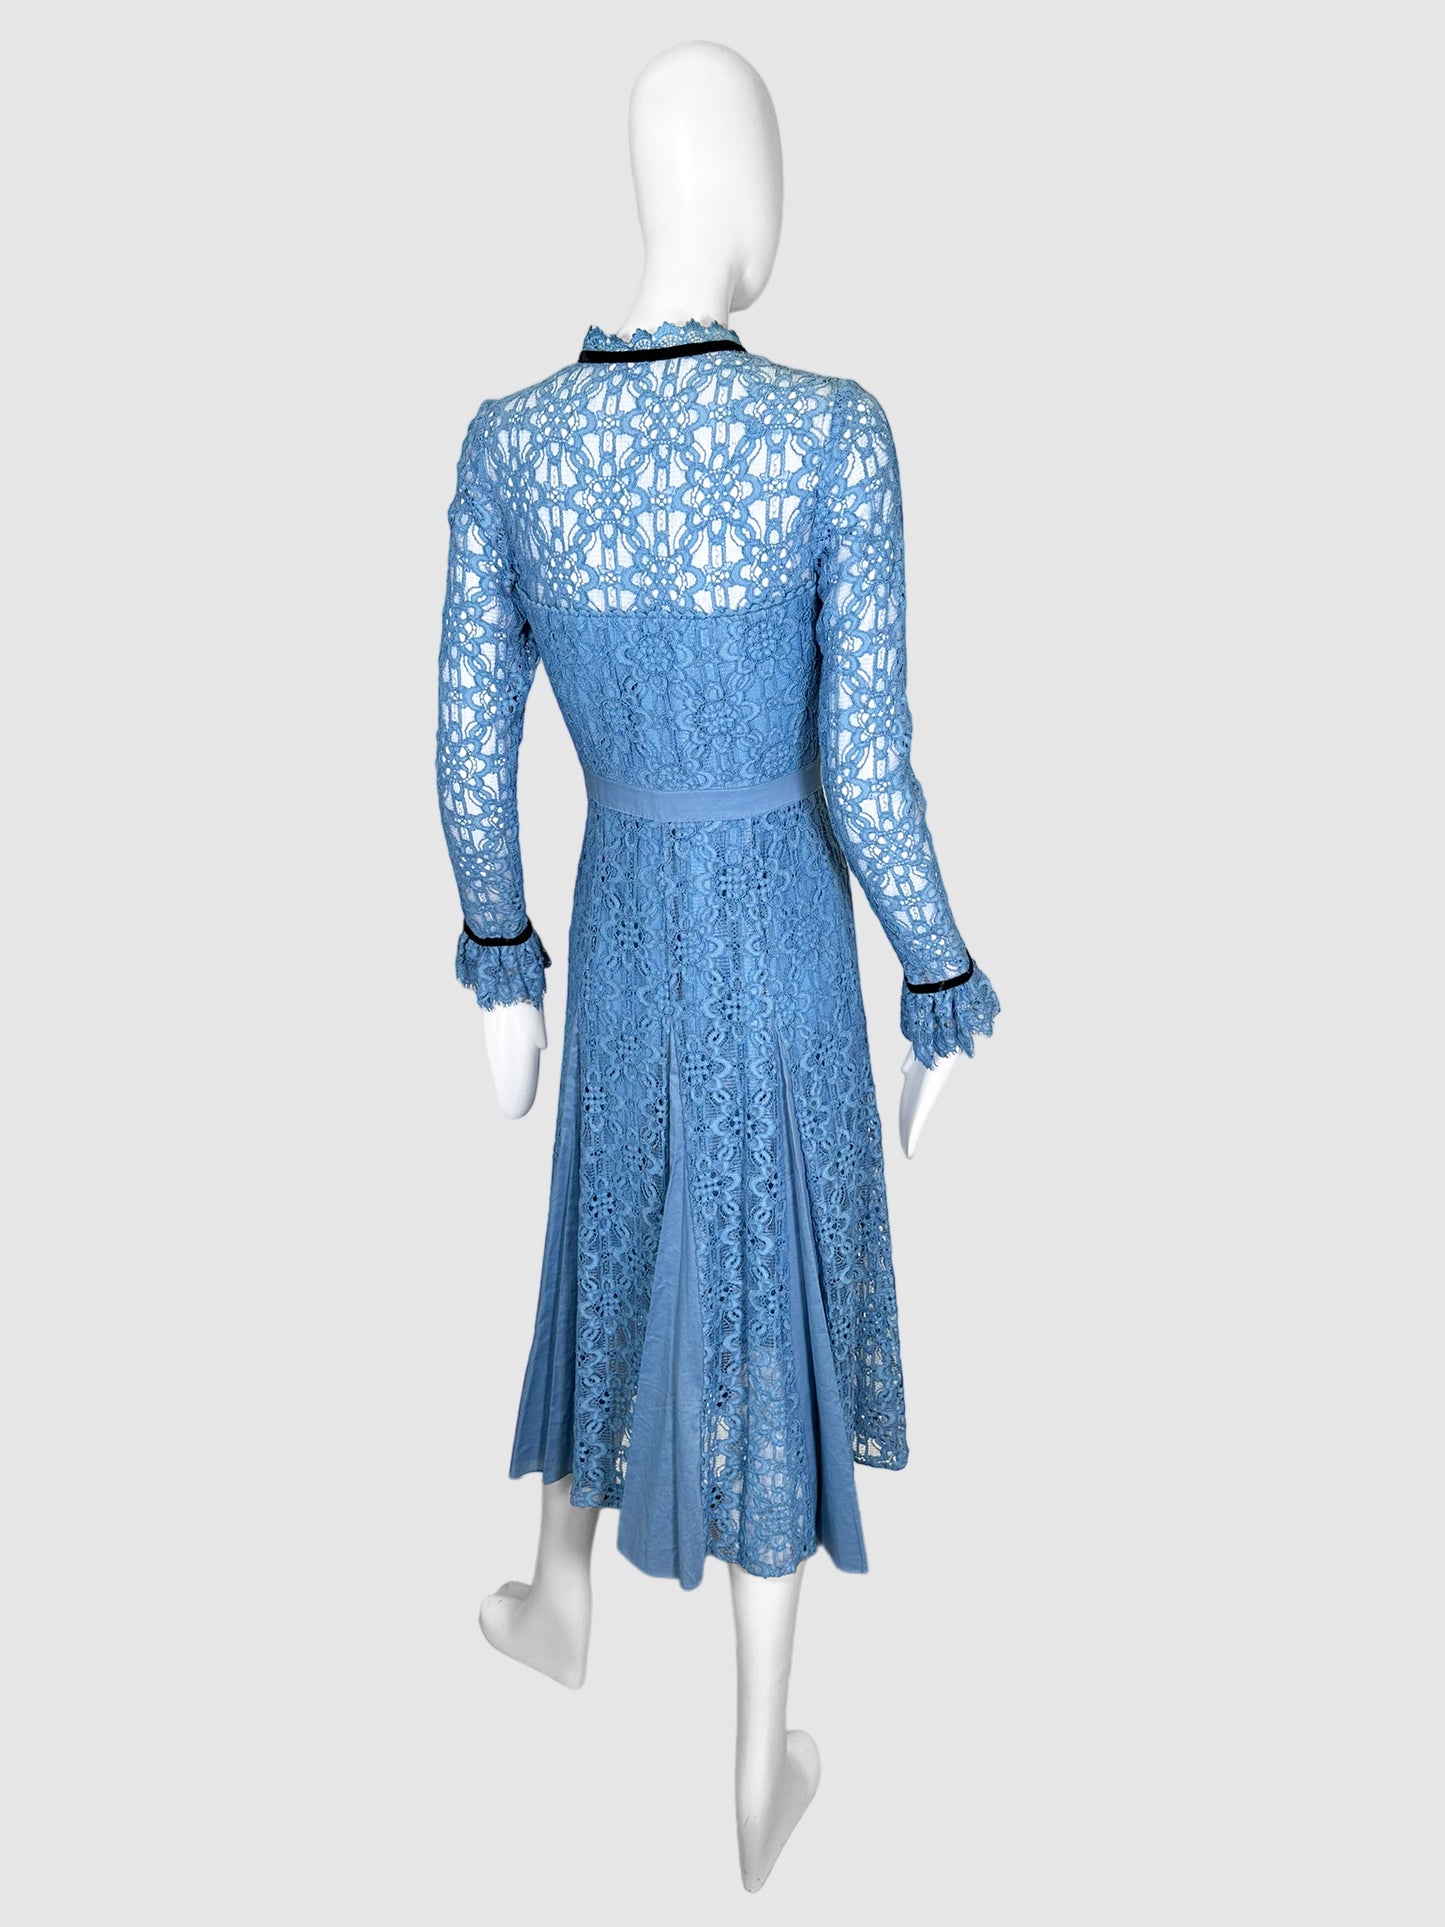 Temperley London Lace A-line Dress - Size 4